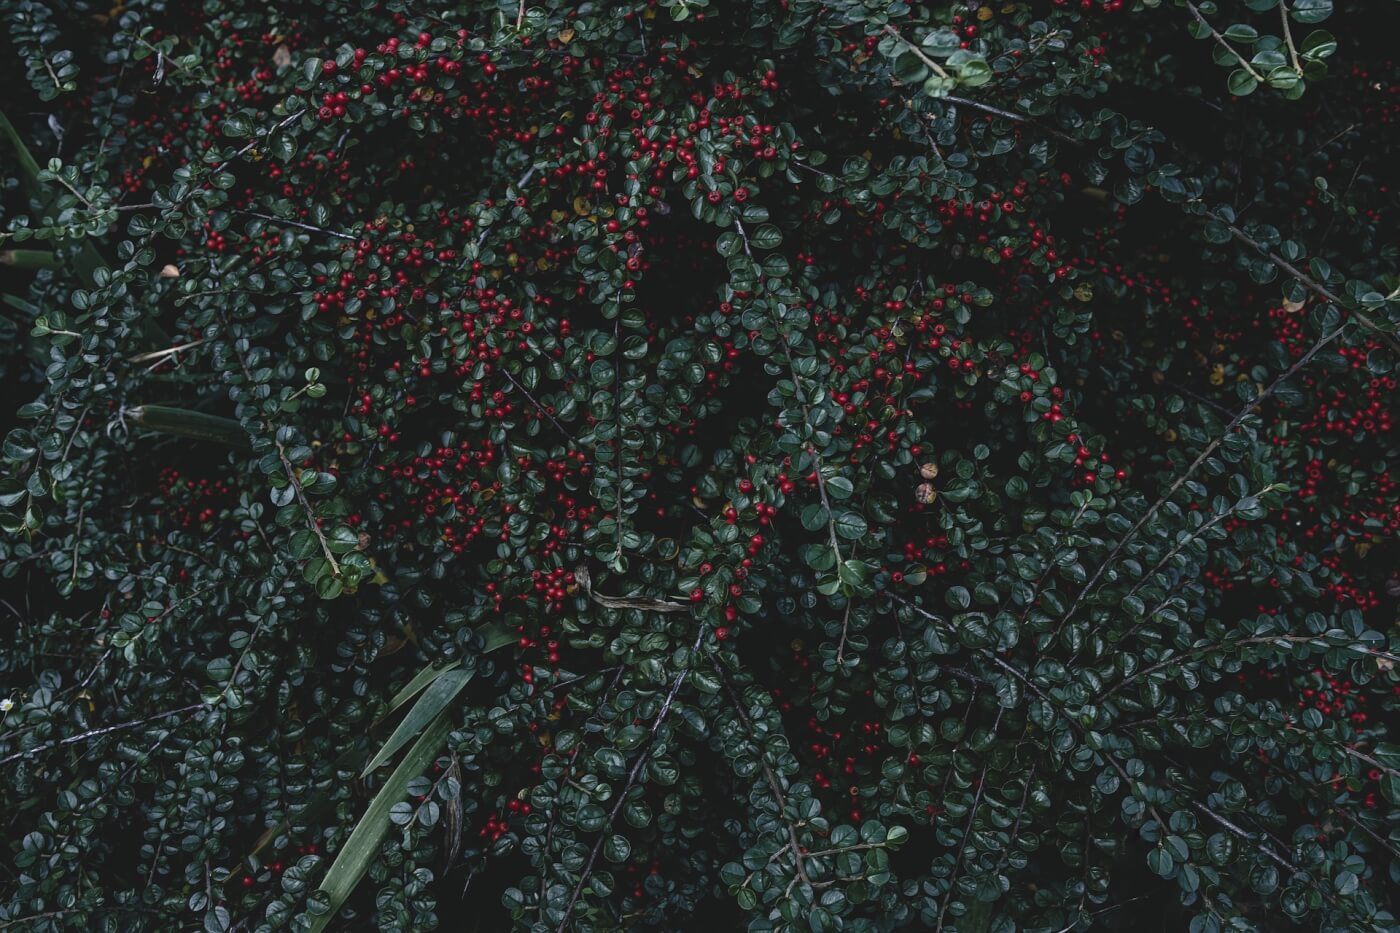 Macro photo of a berry bush